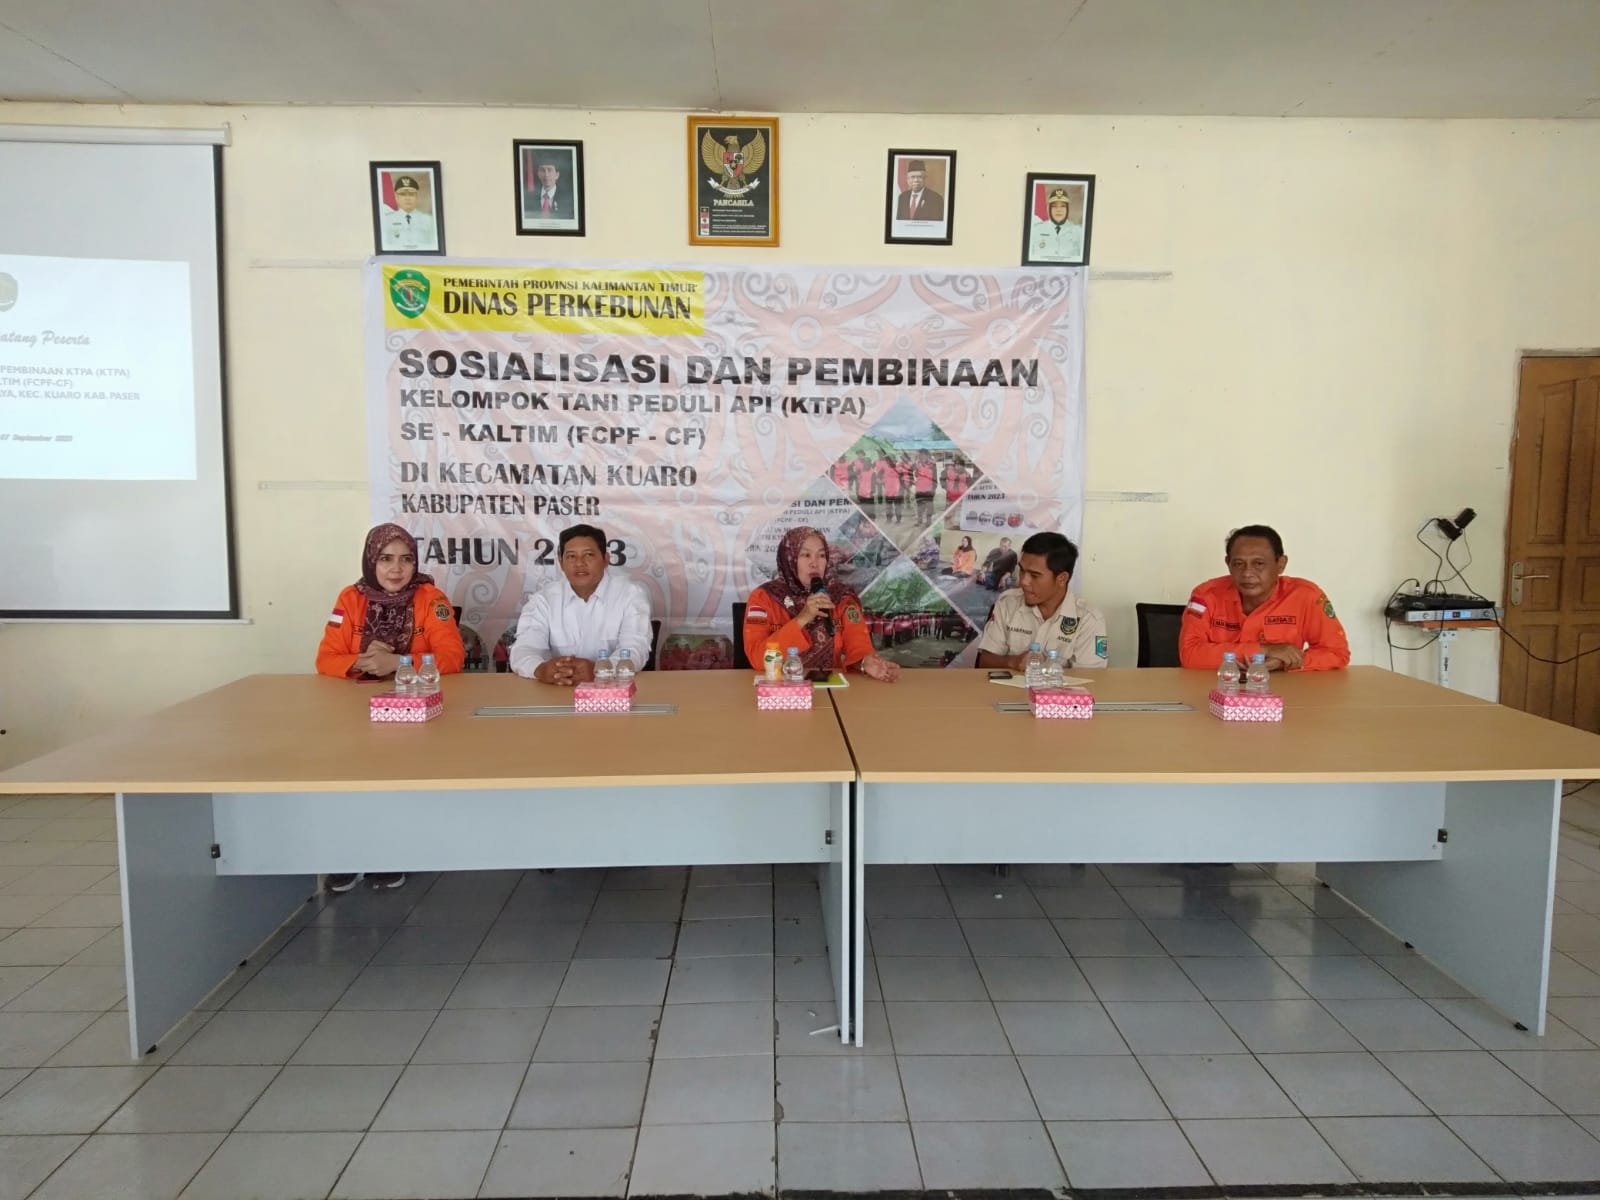 Sosialisasi dan Pembinaan Kelompok Tani Peduli Api (KTPA) di Desa Padang Jaya Kecamatan Kuaro